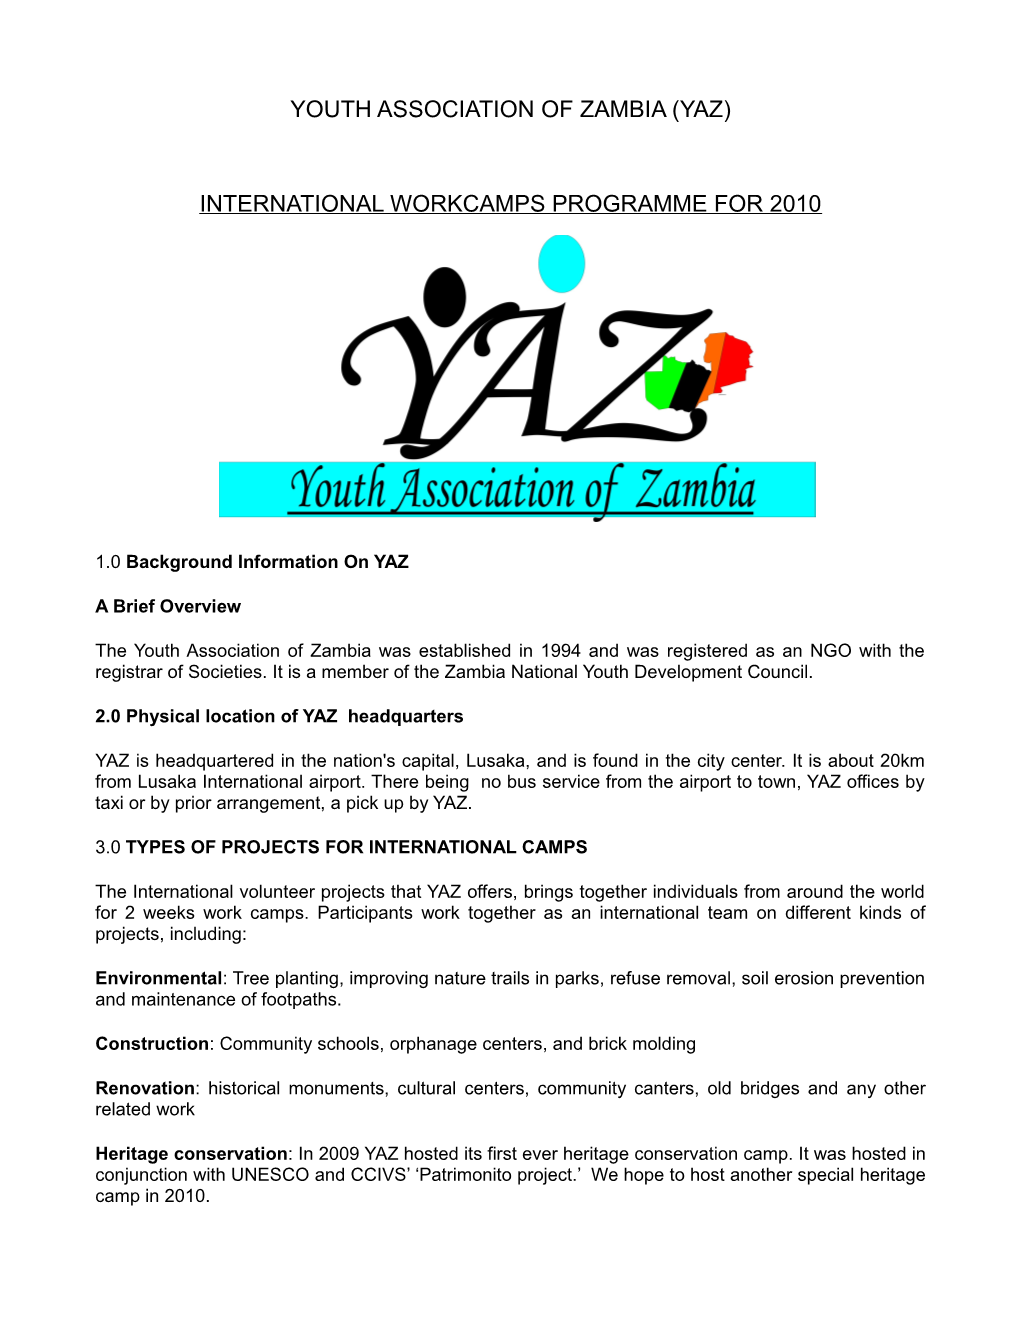 Youth Association of Zambia (Yaz)